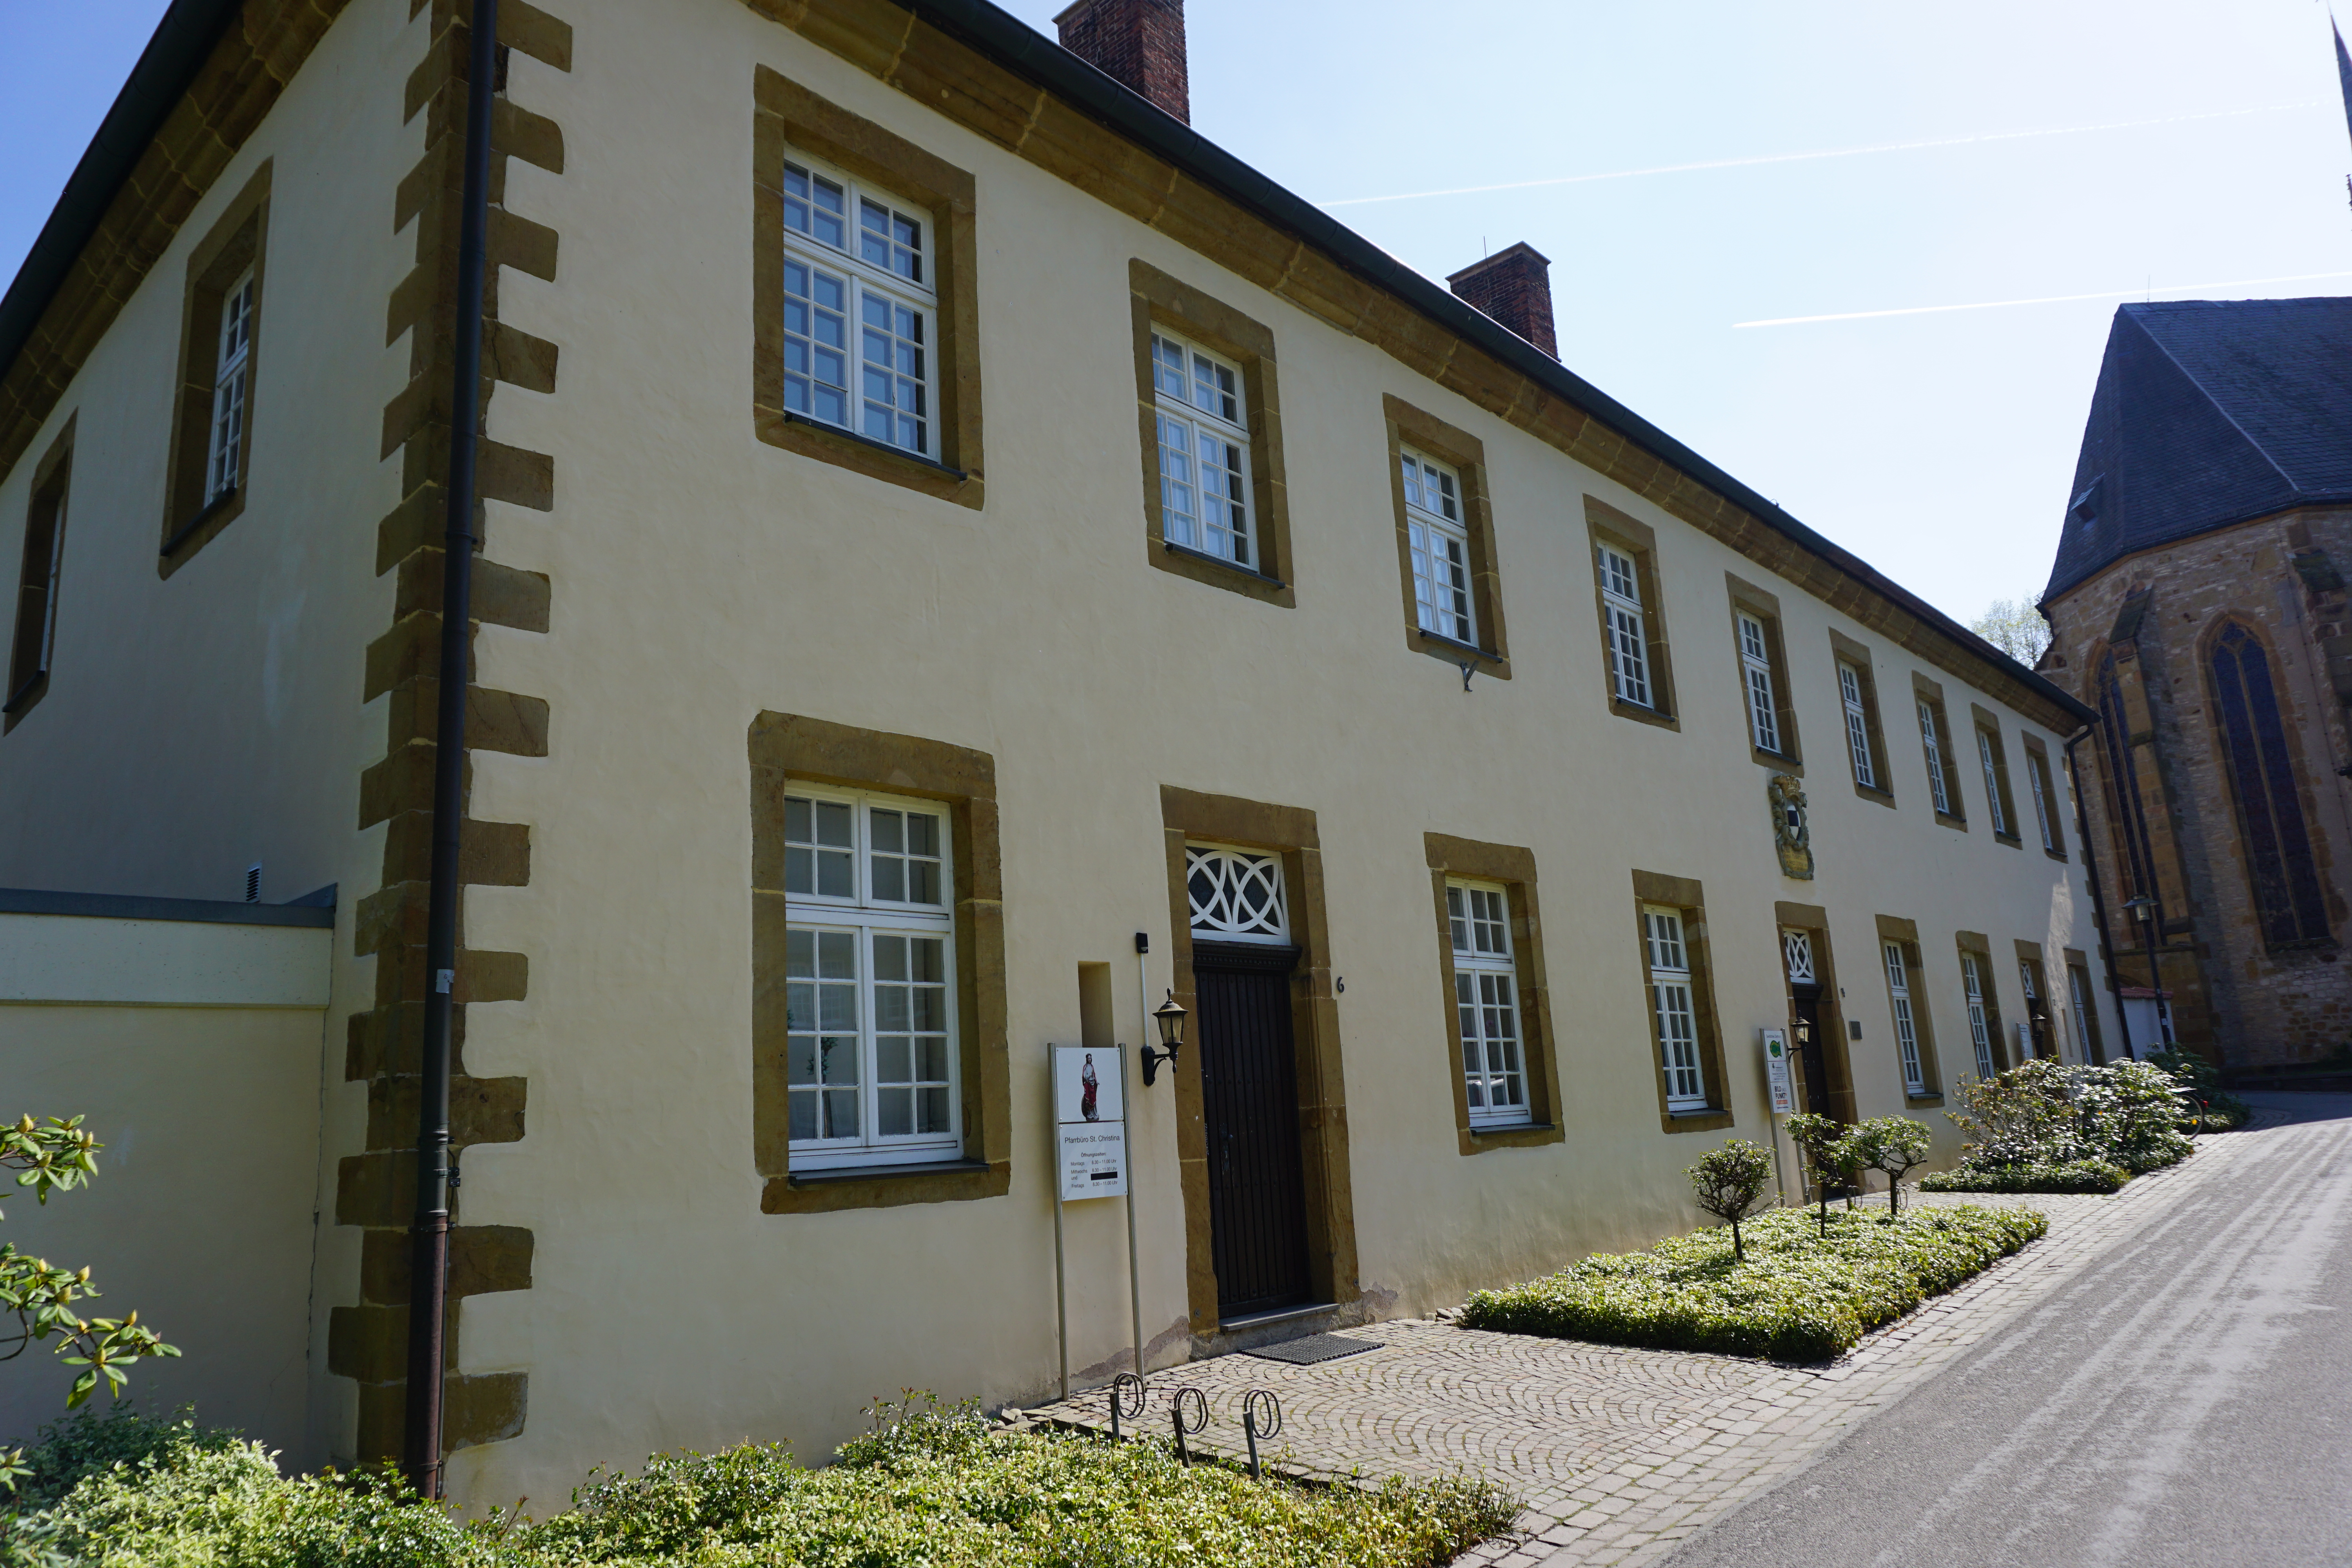 Pfarrhaus der ehemaligen Klosteranlage Herzebrock, Herzebrock-Clarholz.
